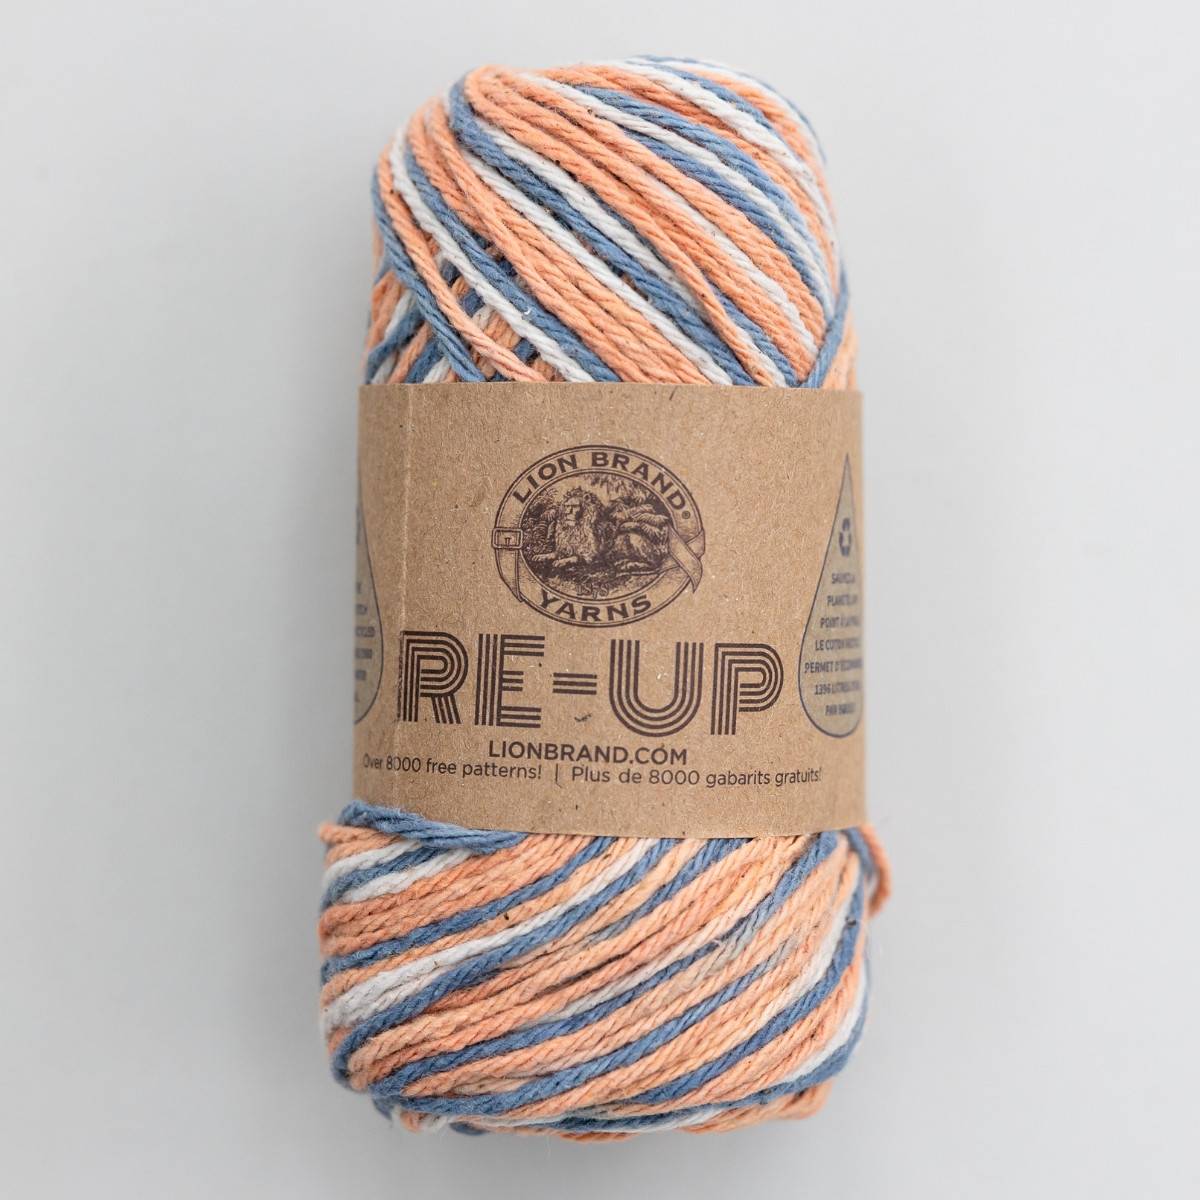 Lion Brand 10 Yarn Bamboo Knitting Needle - Size US 8